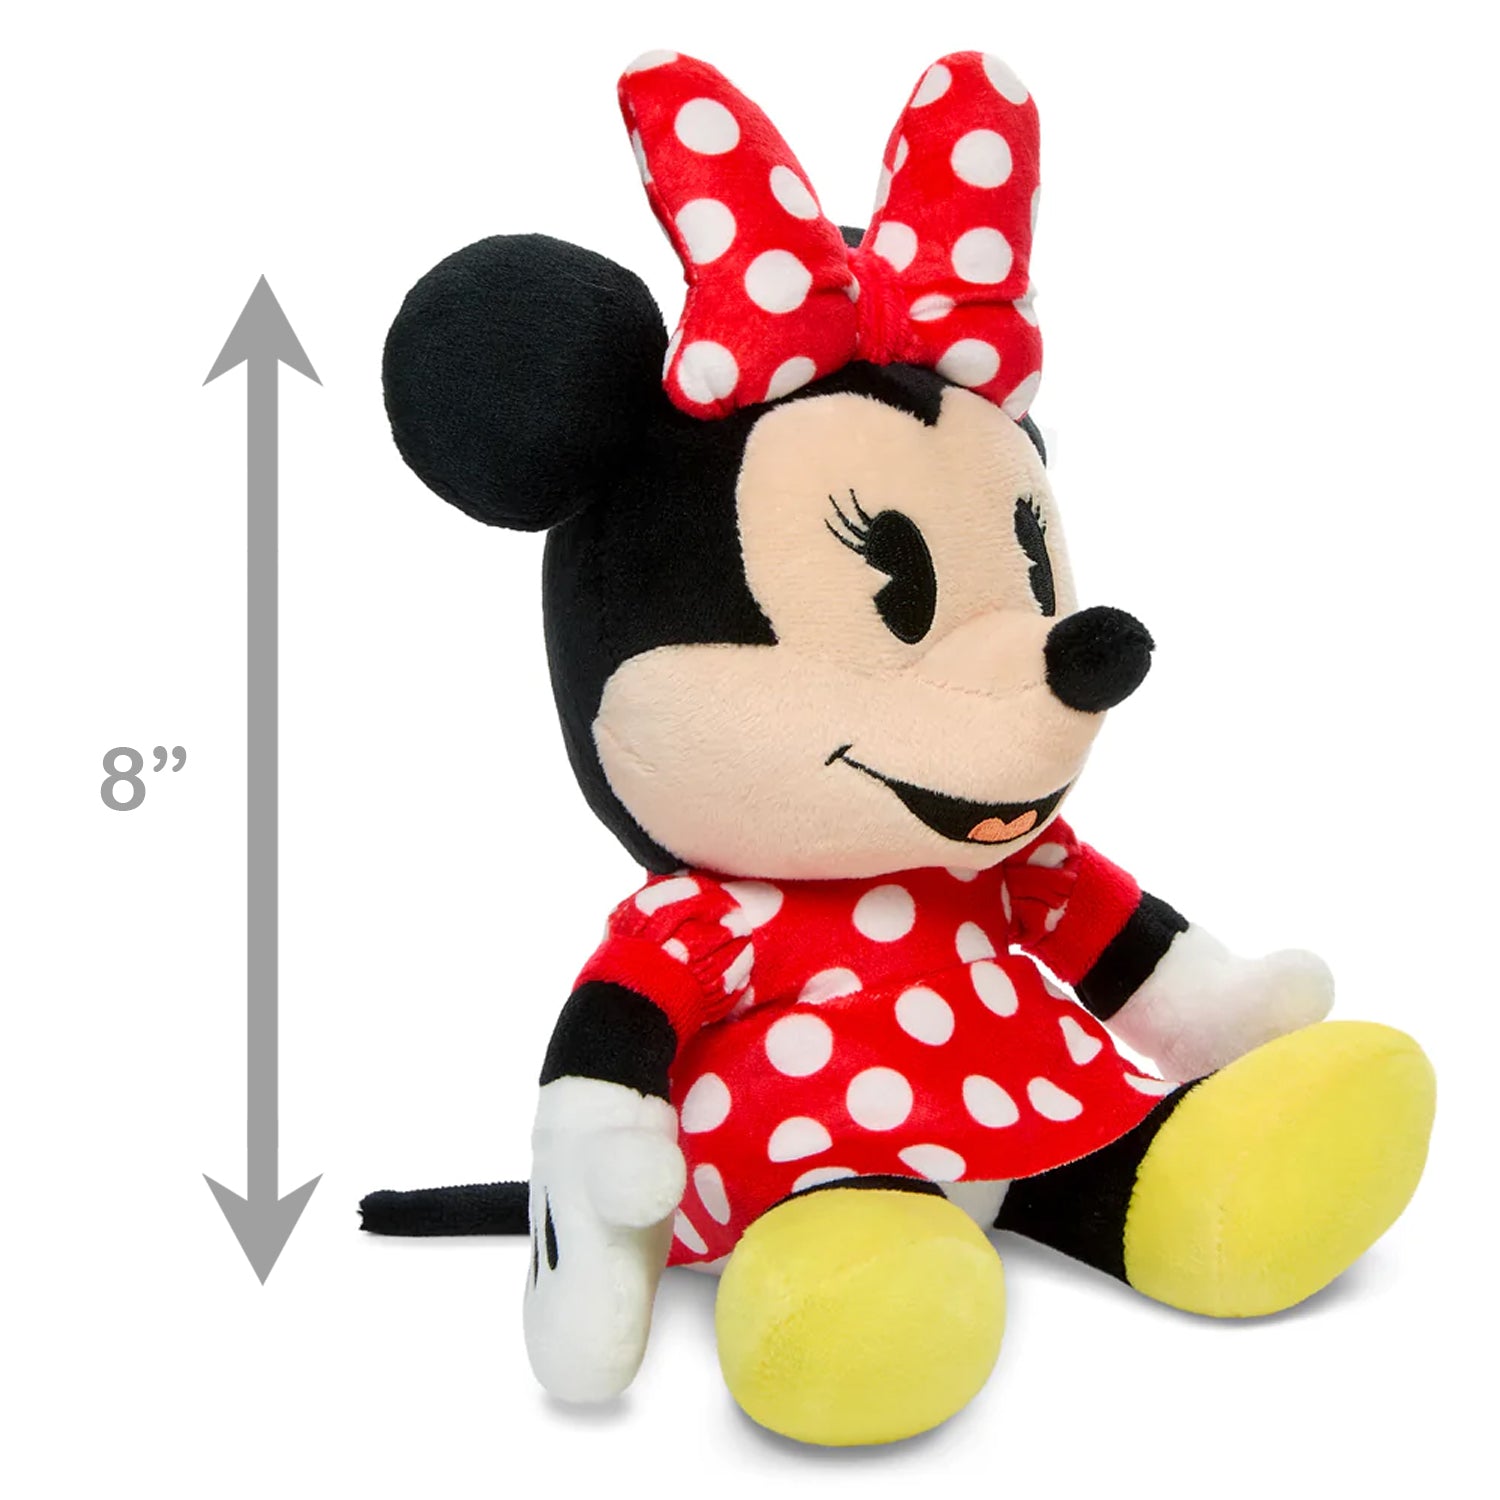 Disney 7.5" Minnie Mouse Phunny Plush